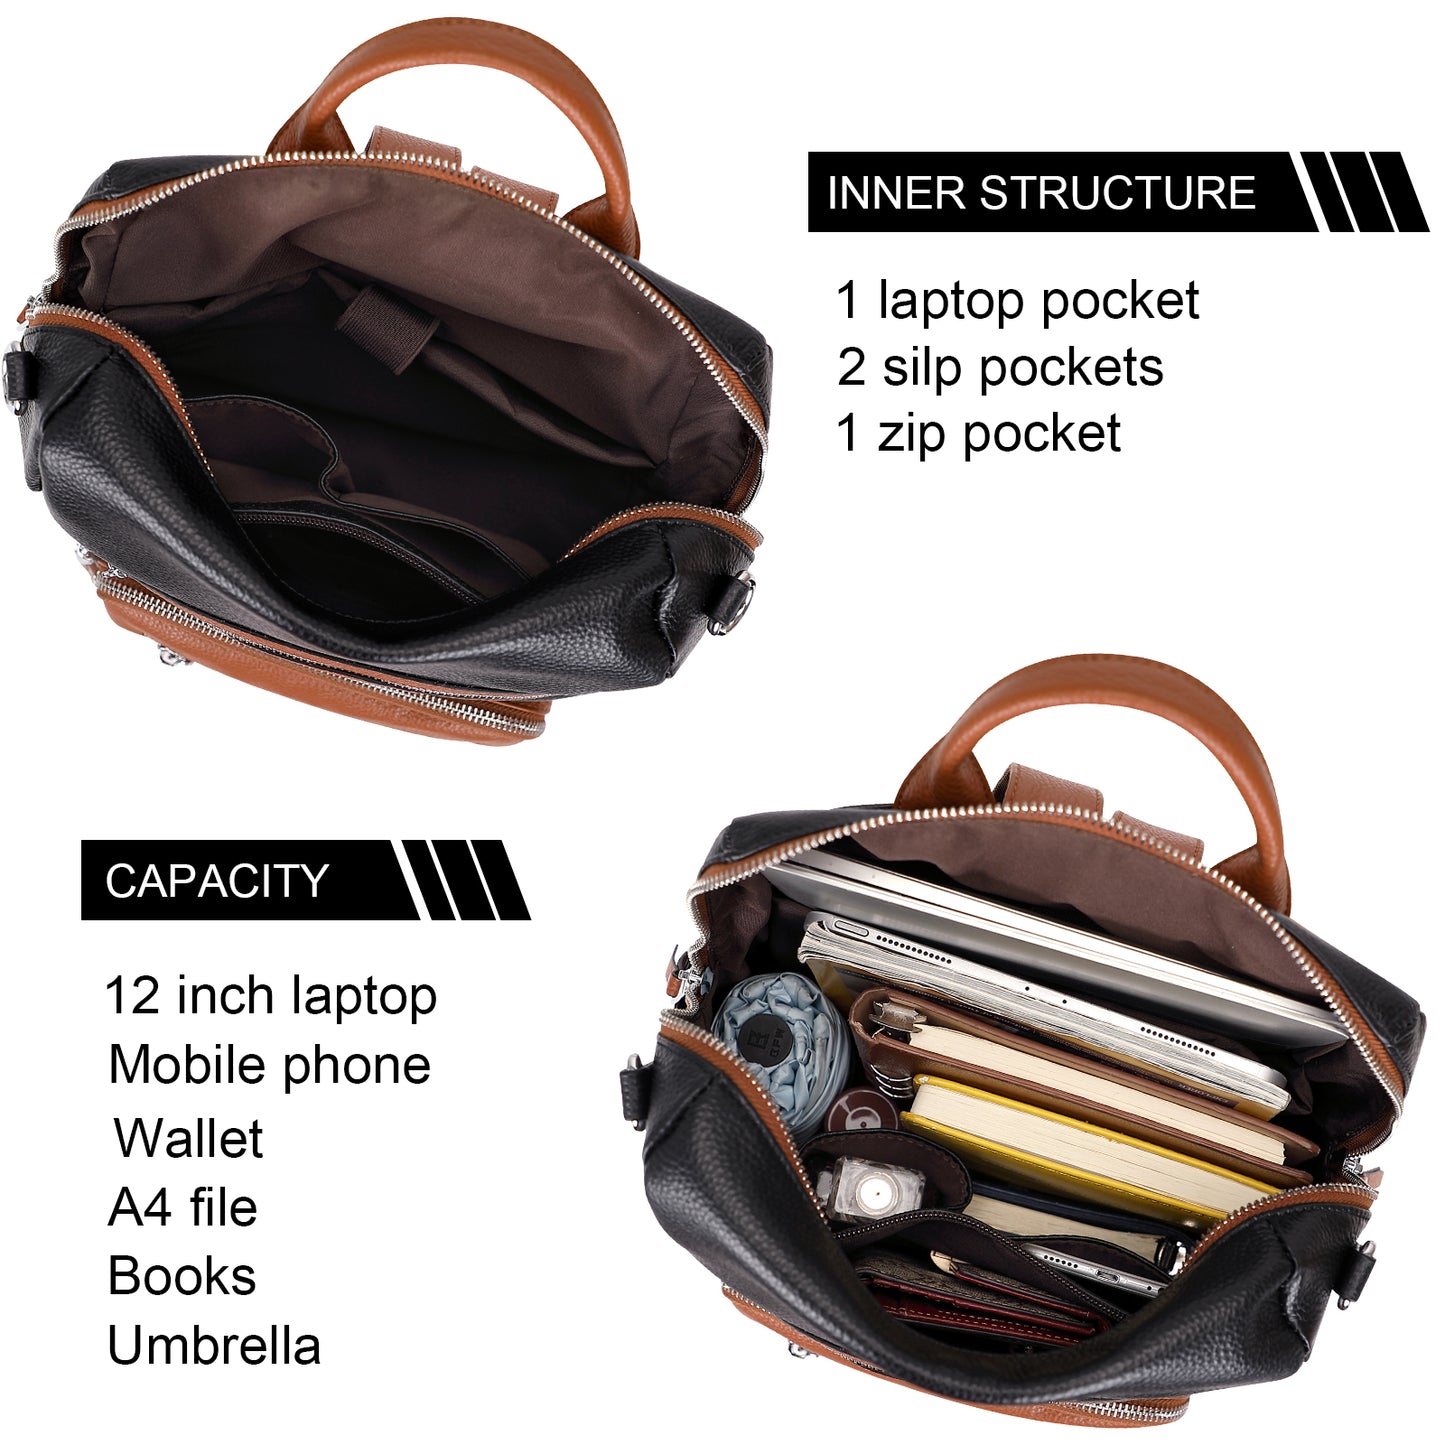 ALTOSY Laptop Leather Backpack